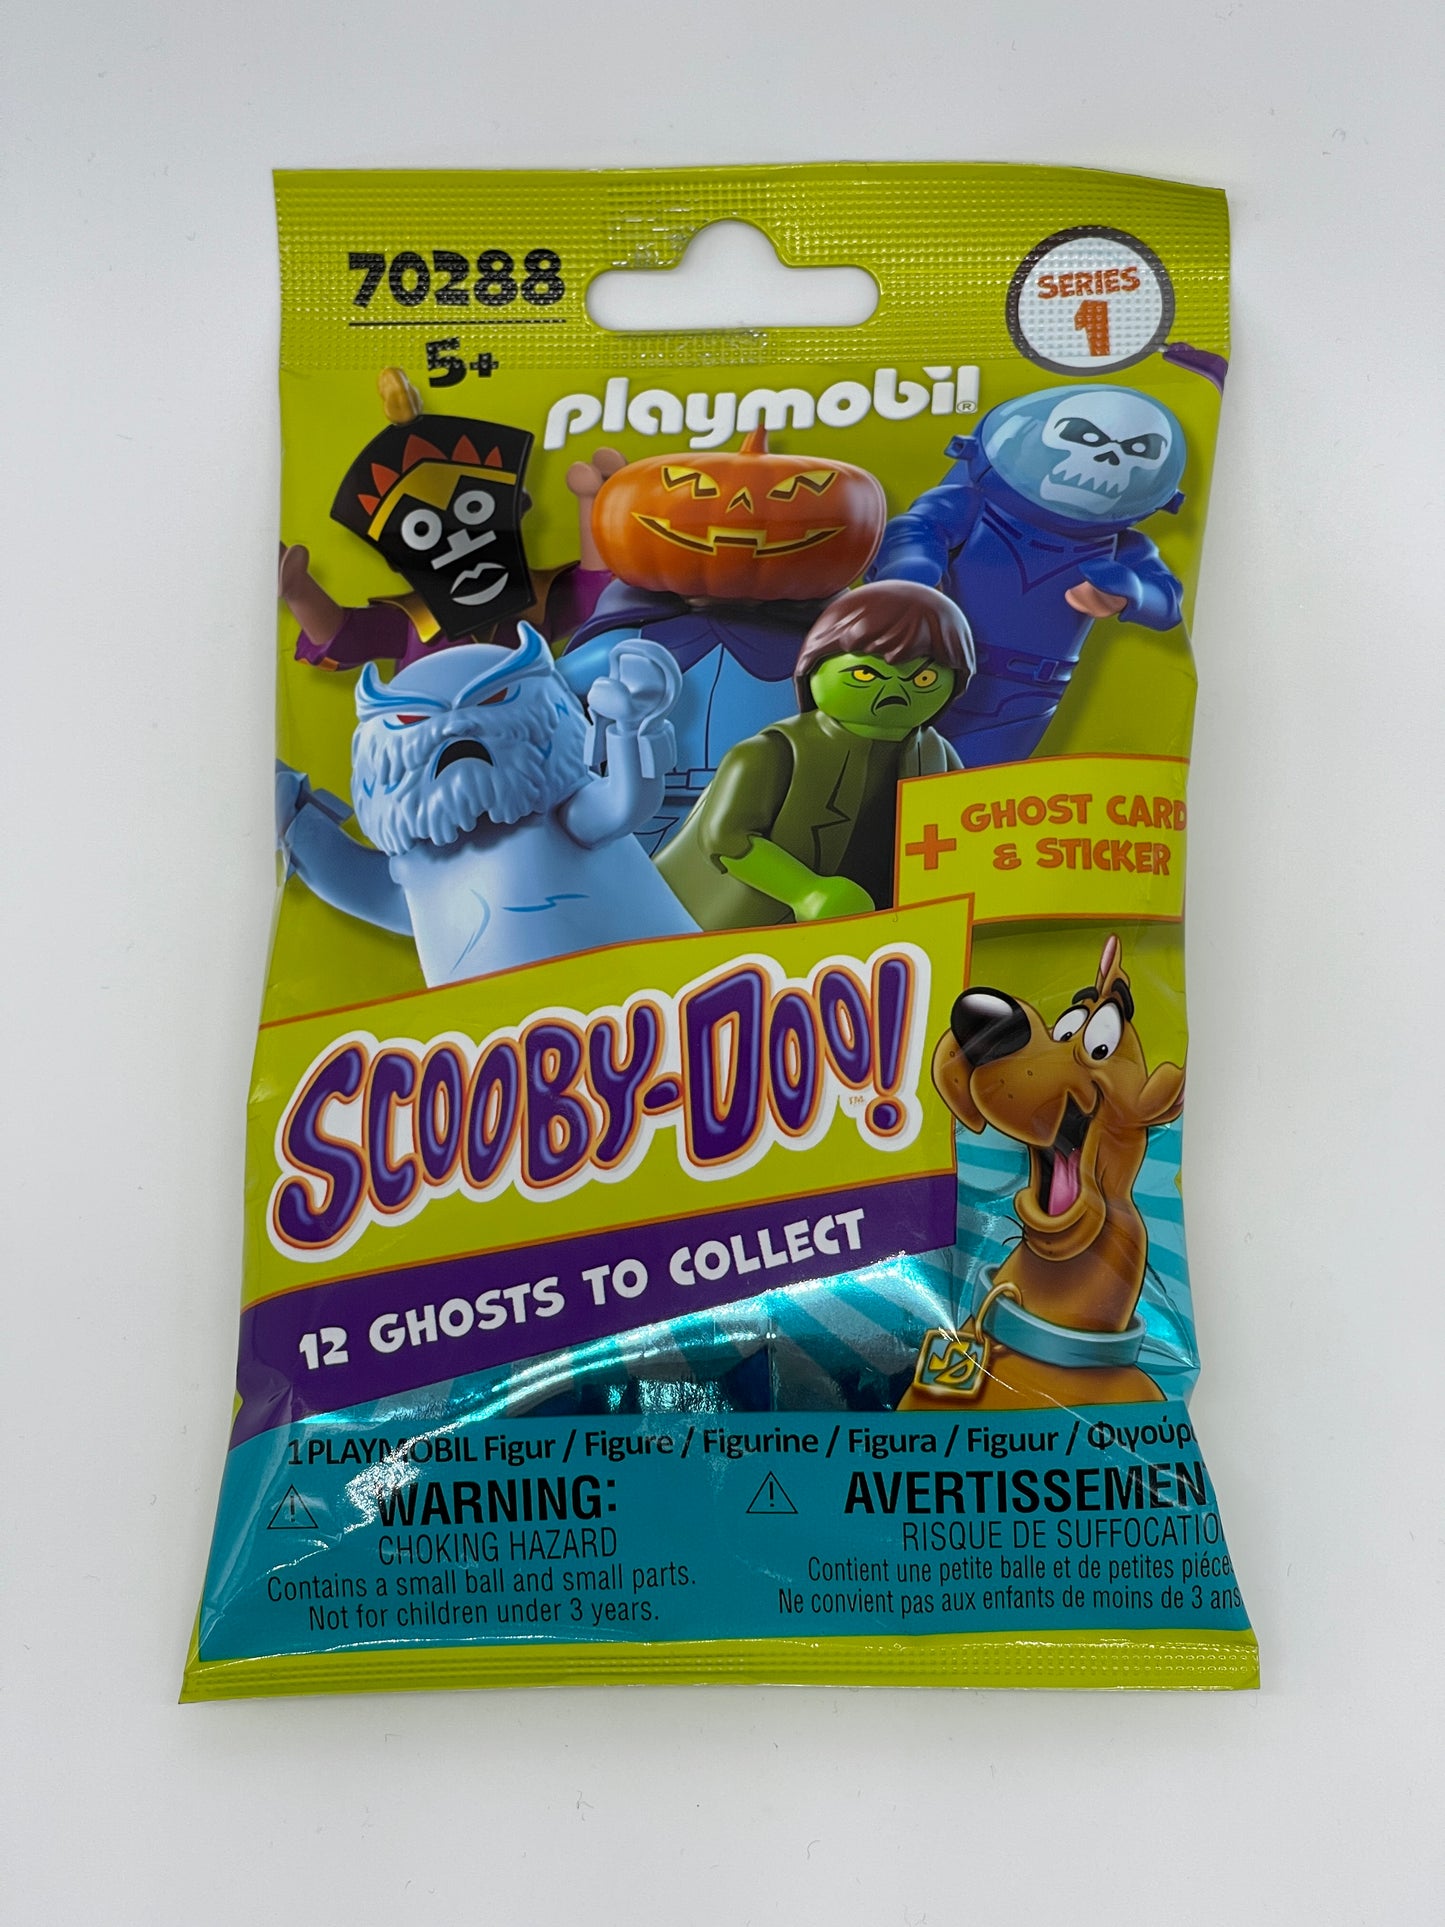 Playmobil 70288 Scooby Doo 12 Ghosts Collect Blindbag + Geisterkarte & Sticker